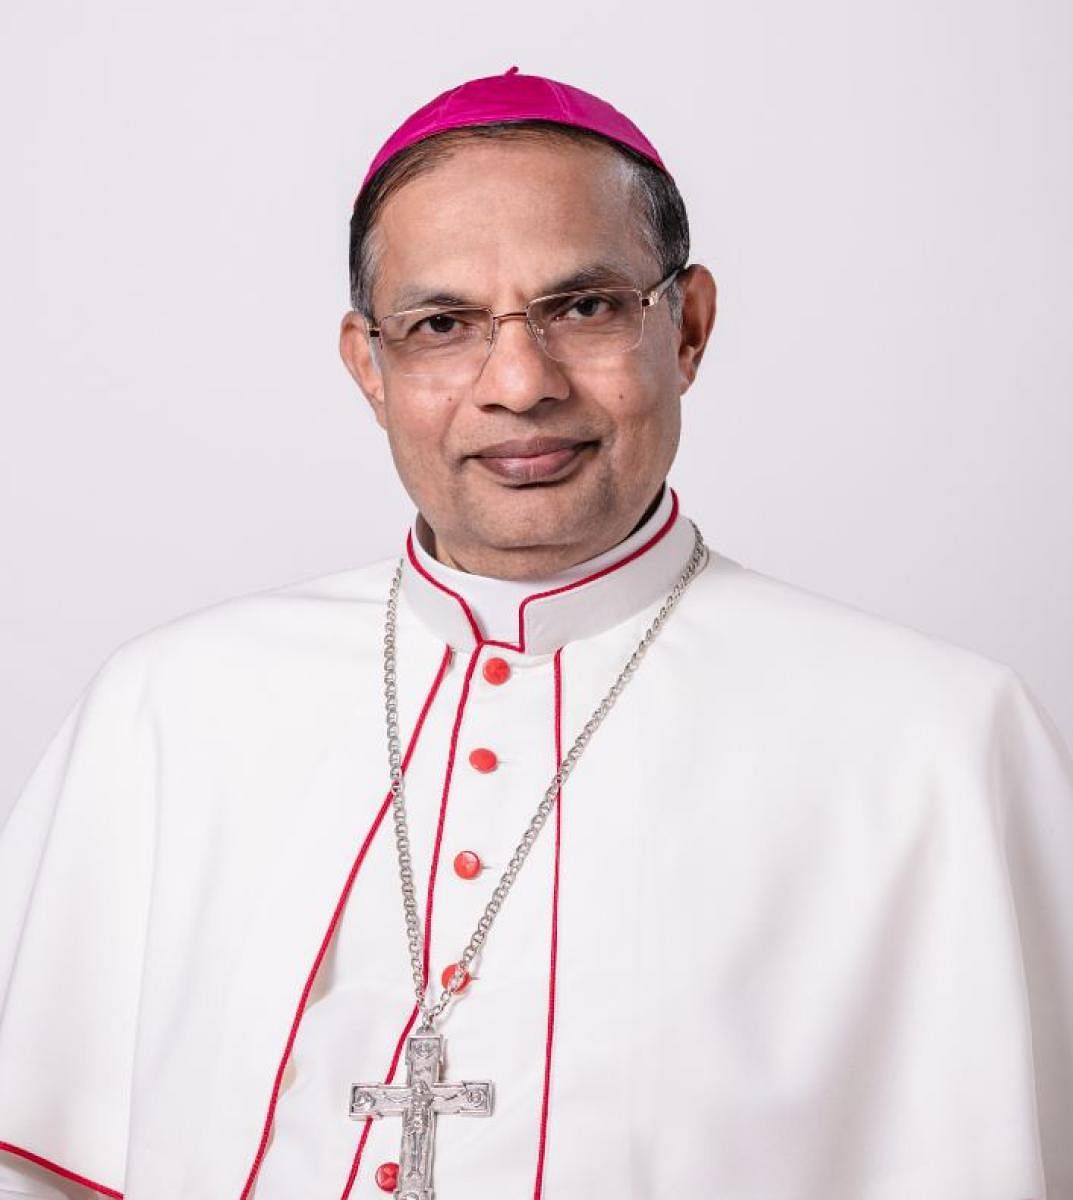 M'lore Diocese's 'Laudato Si' campaign